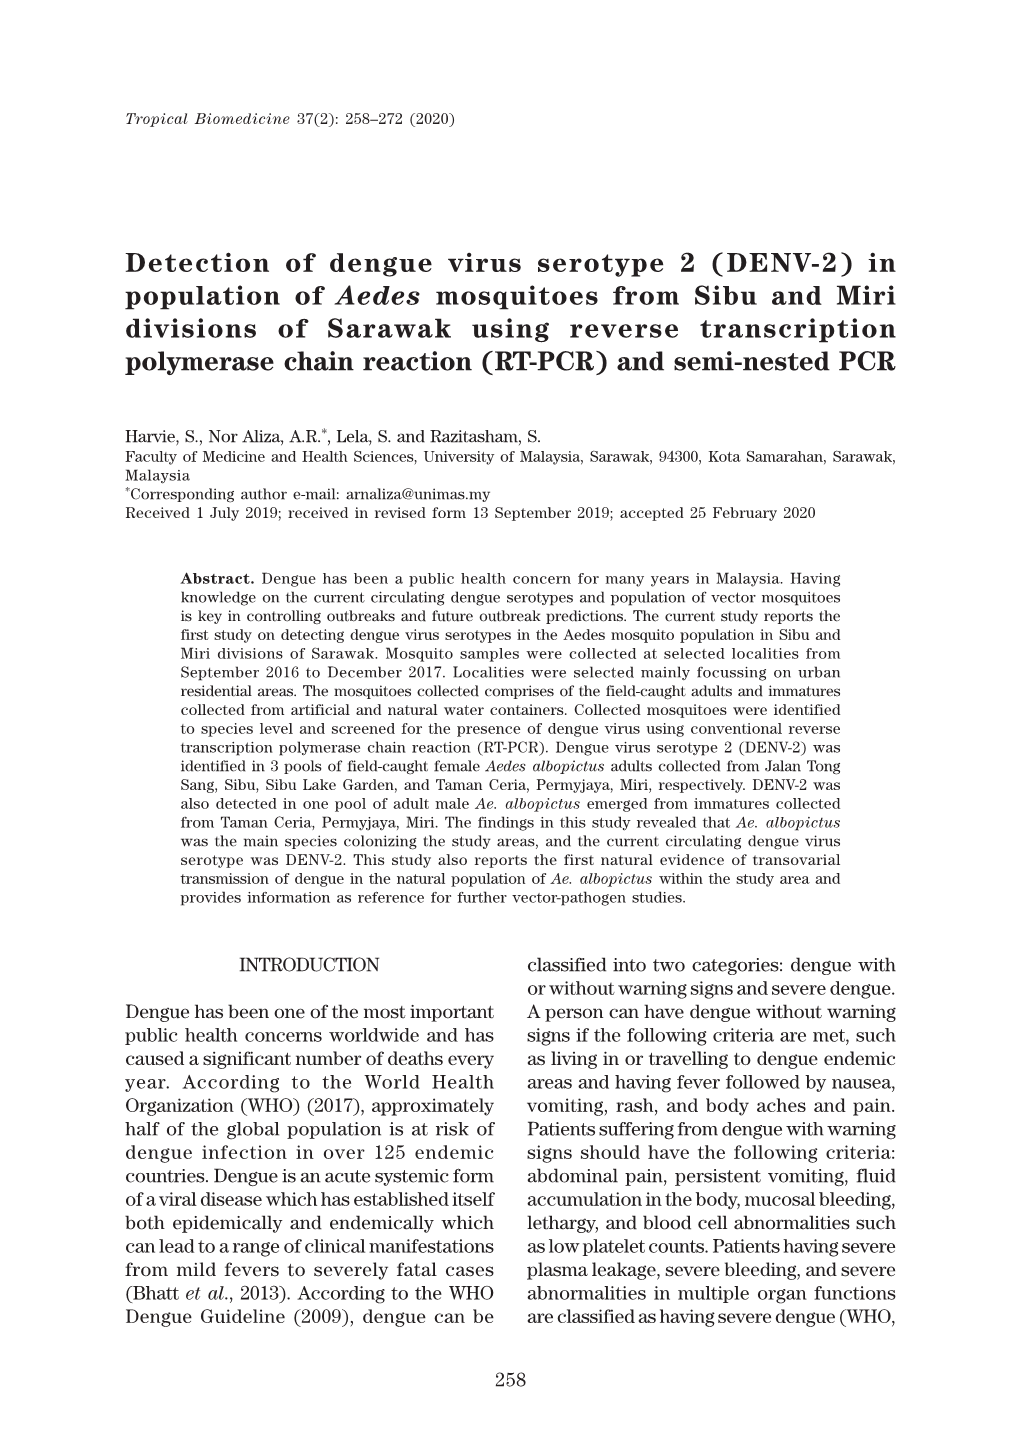 Detection of Dengue Virus Serotype 2 (DENV-2) in Population of Aedes